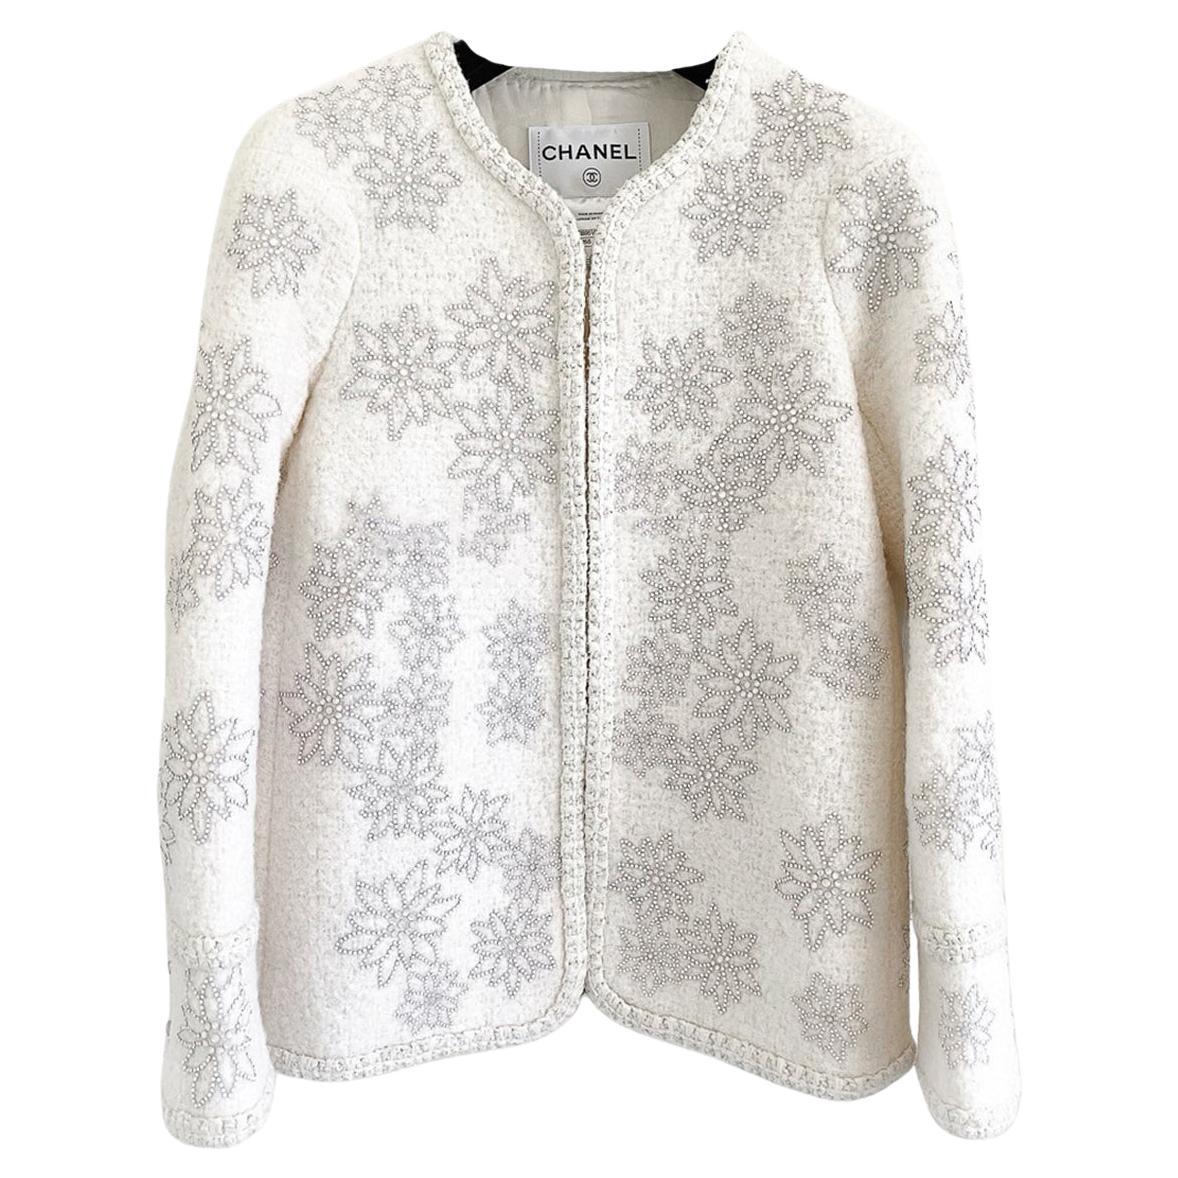 Chanel Couture Paris / Salzburg Edelweiss Tweed Jacket